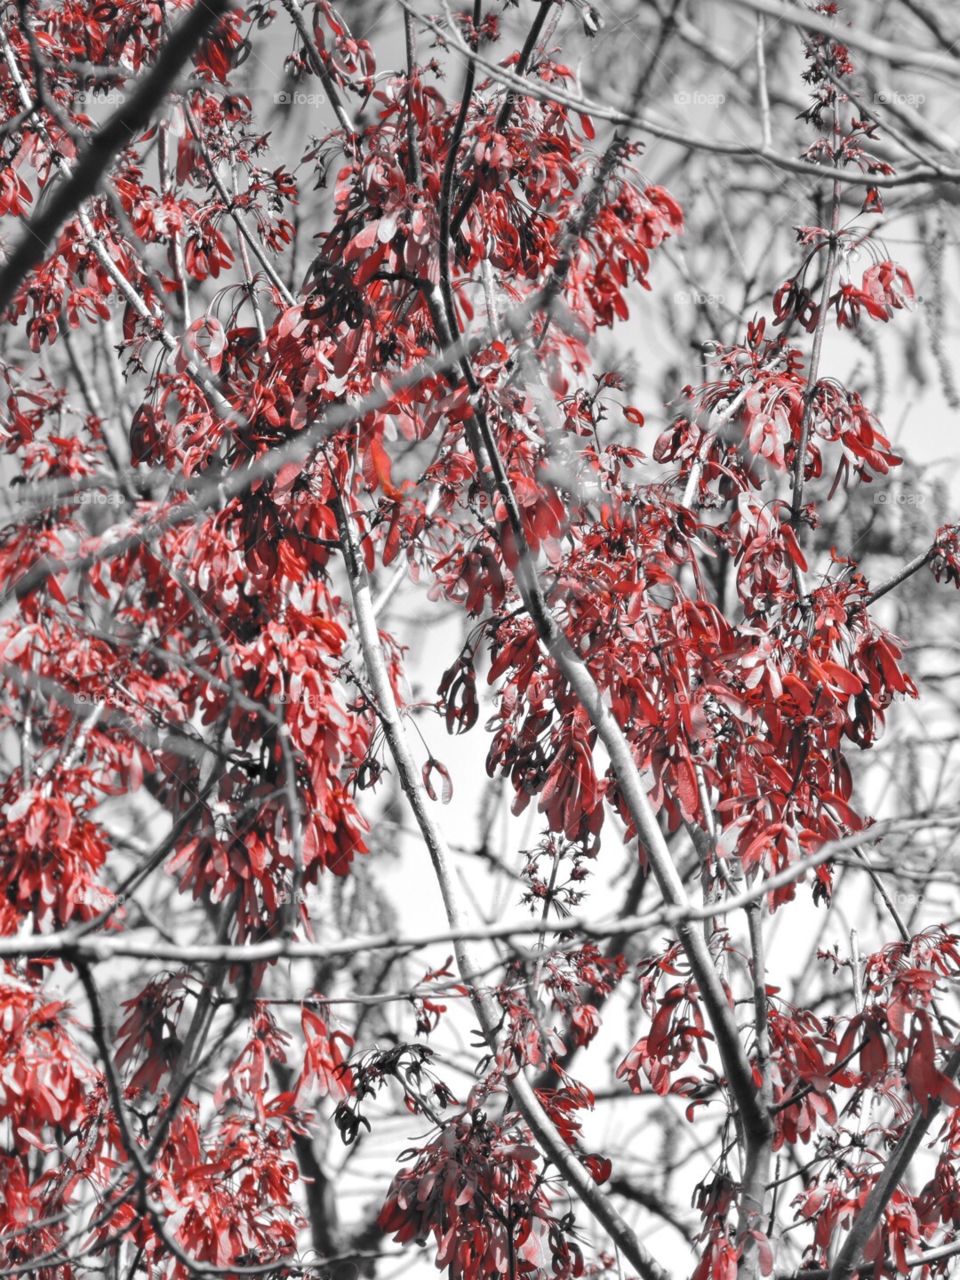 Red foliage